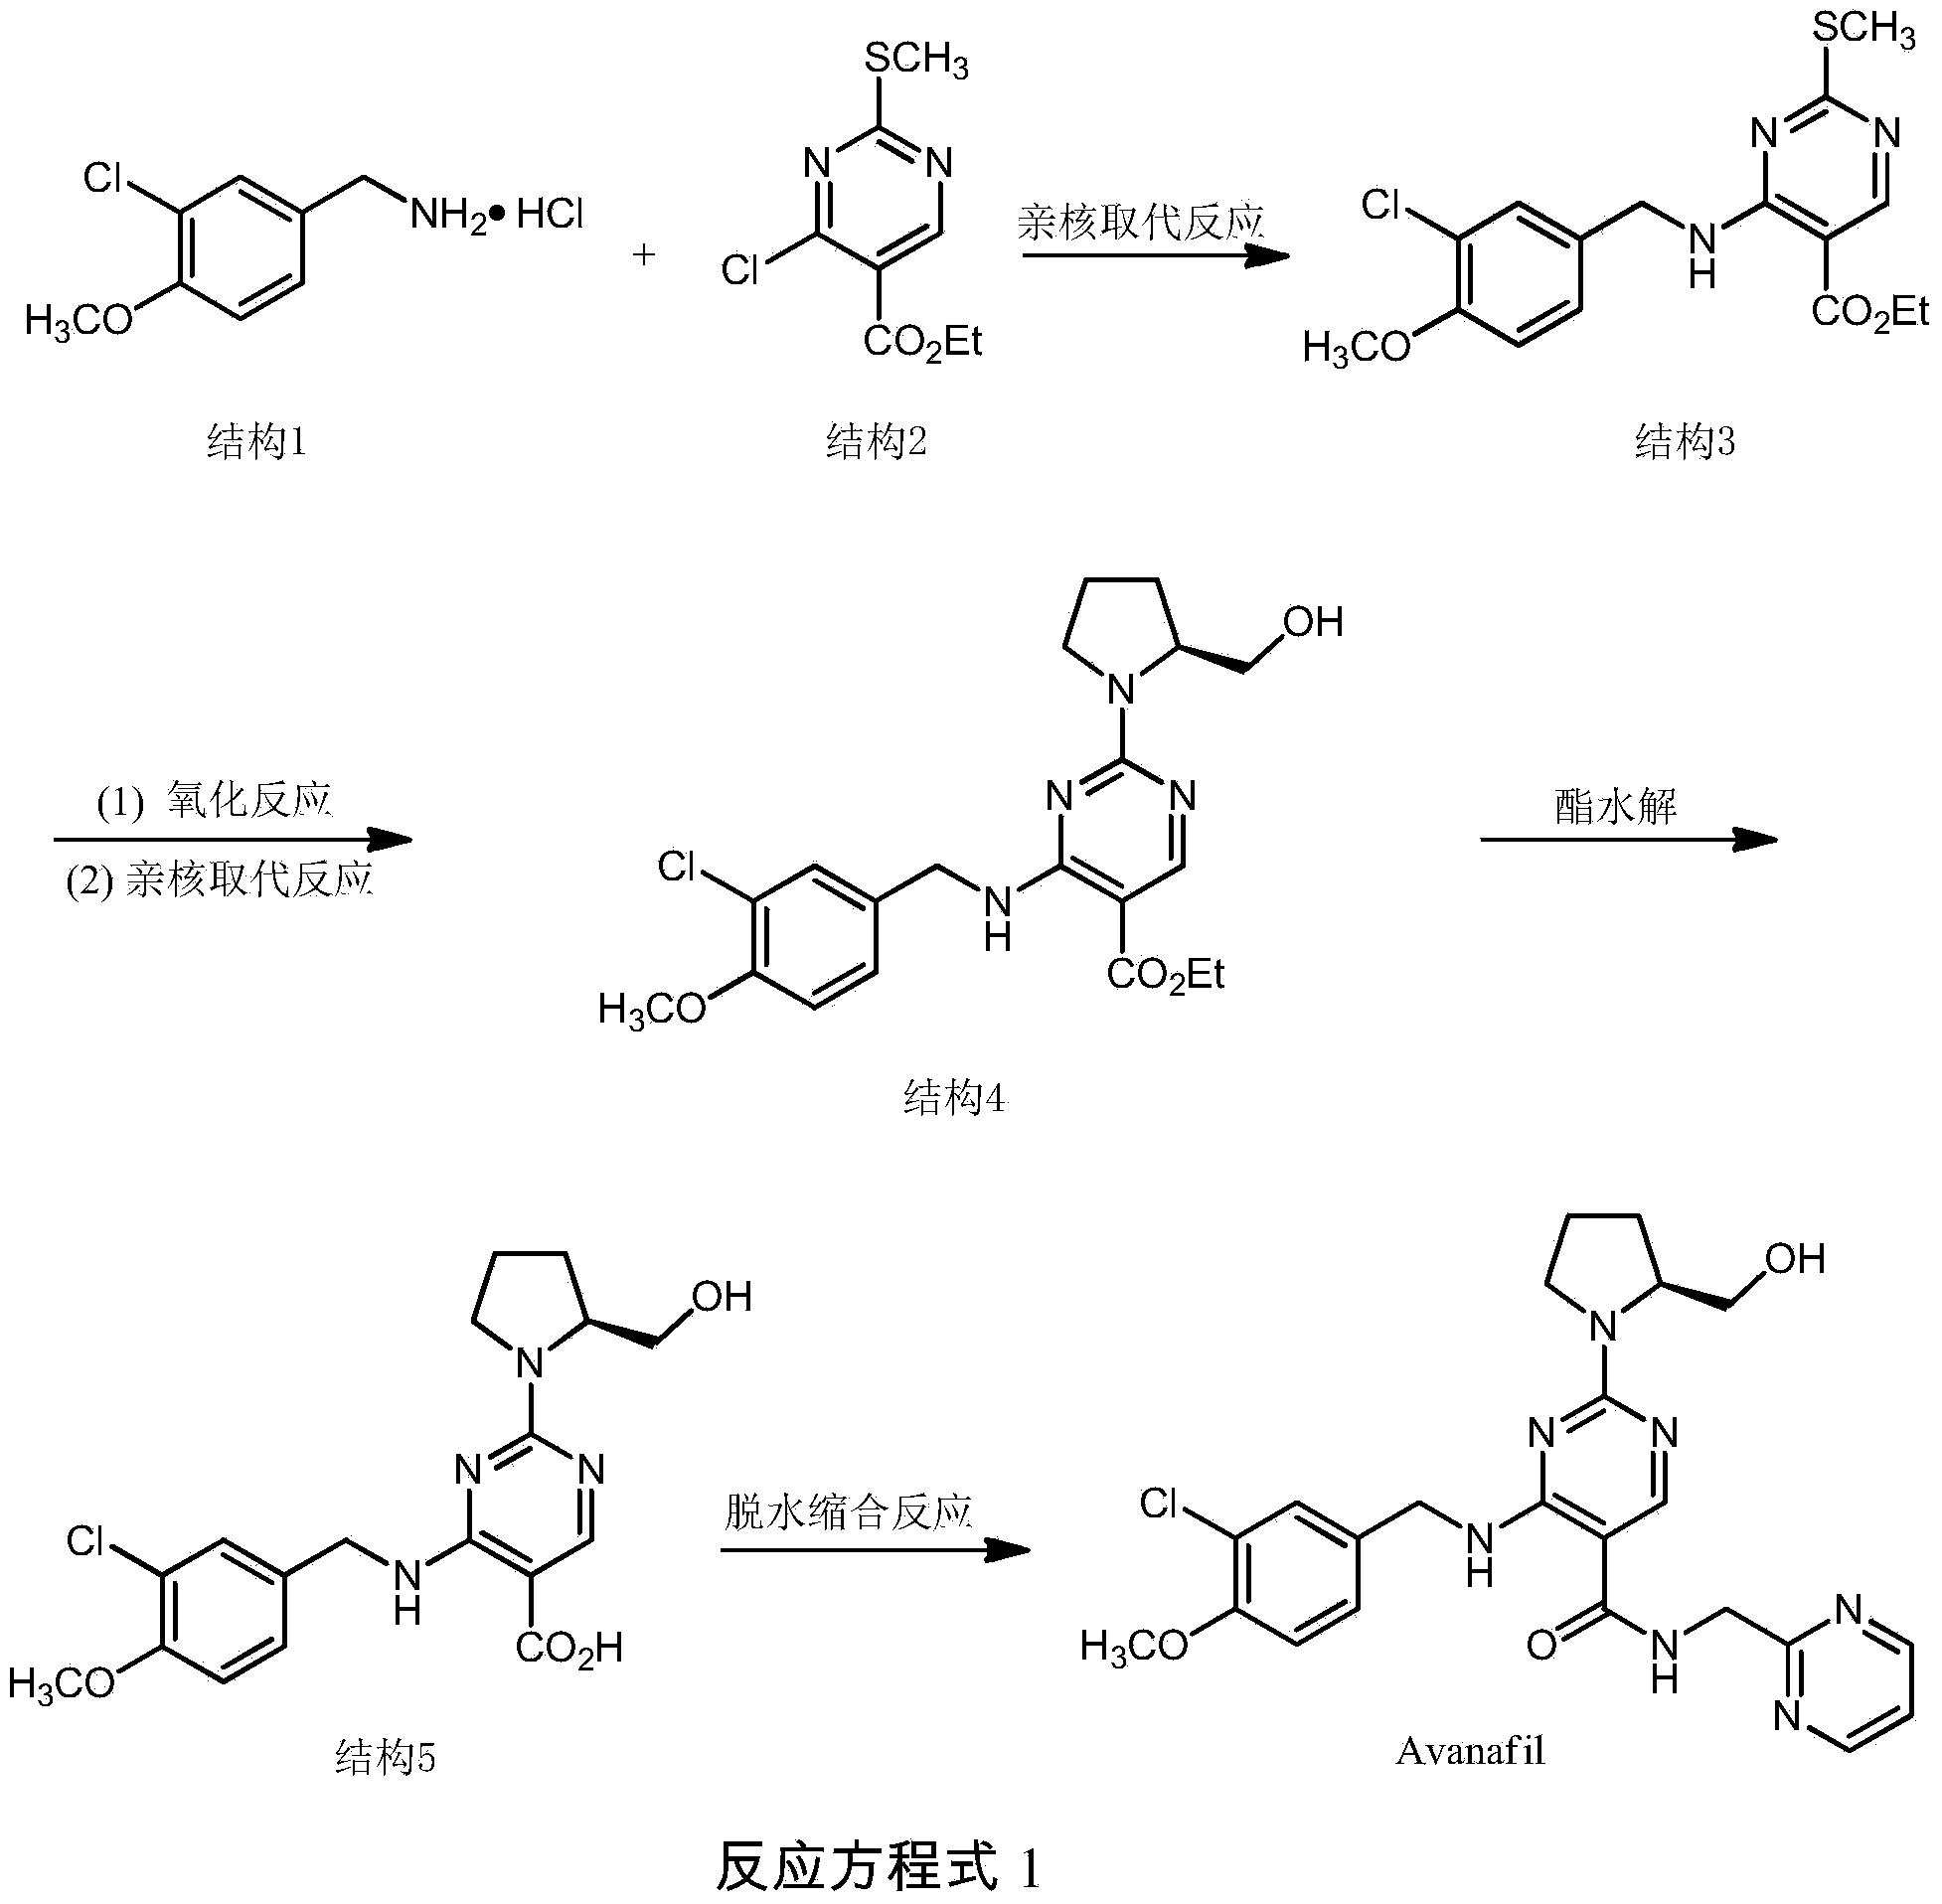 Synthesis method of avanafil